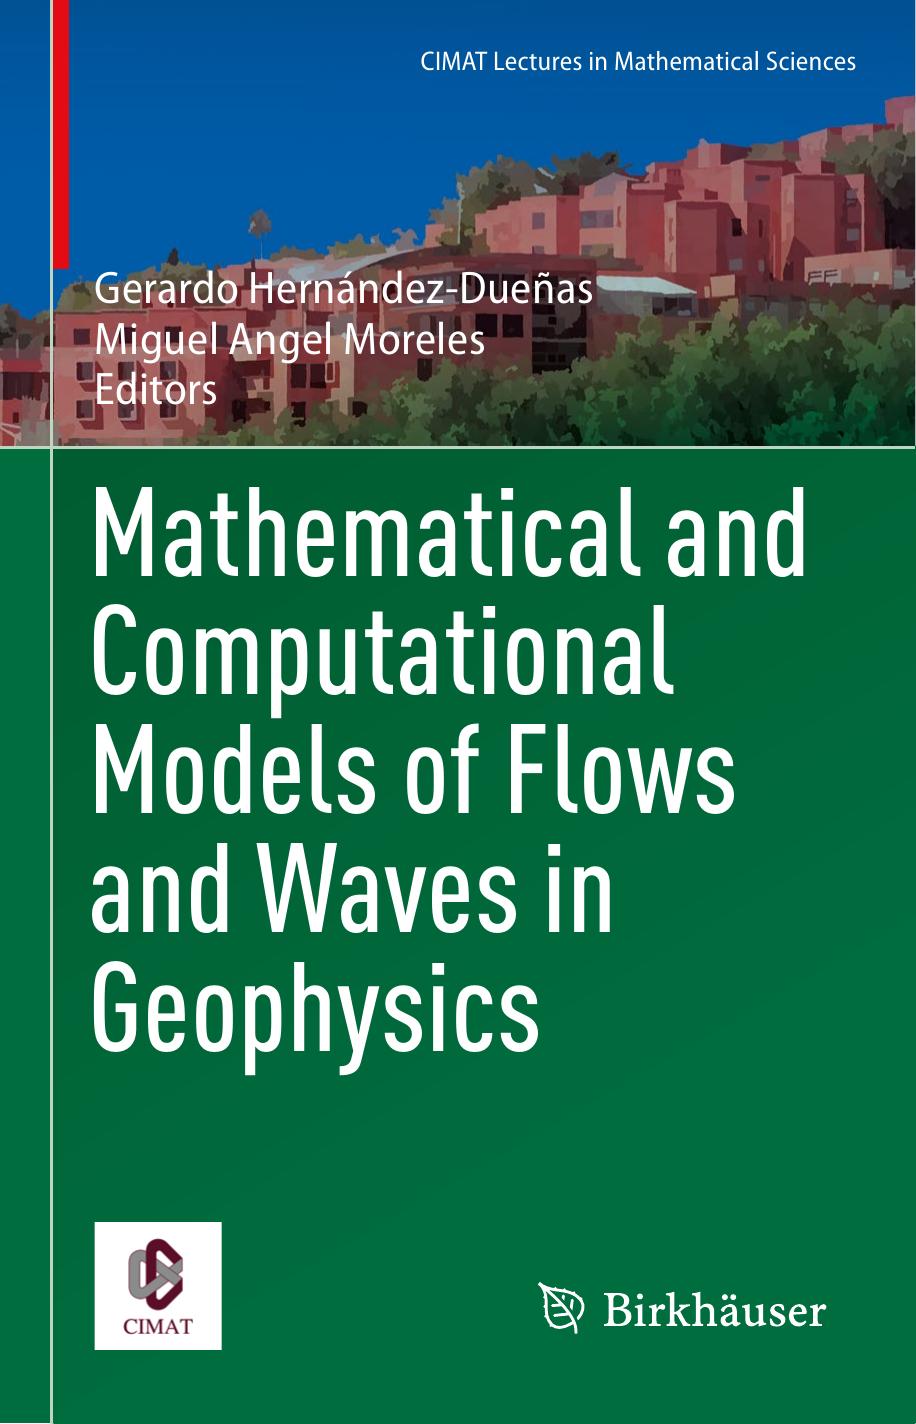 Models of Flows and Waves in Geophysics-Birkhäuser 2022